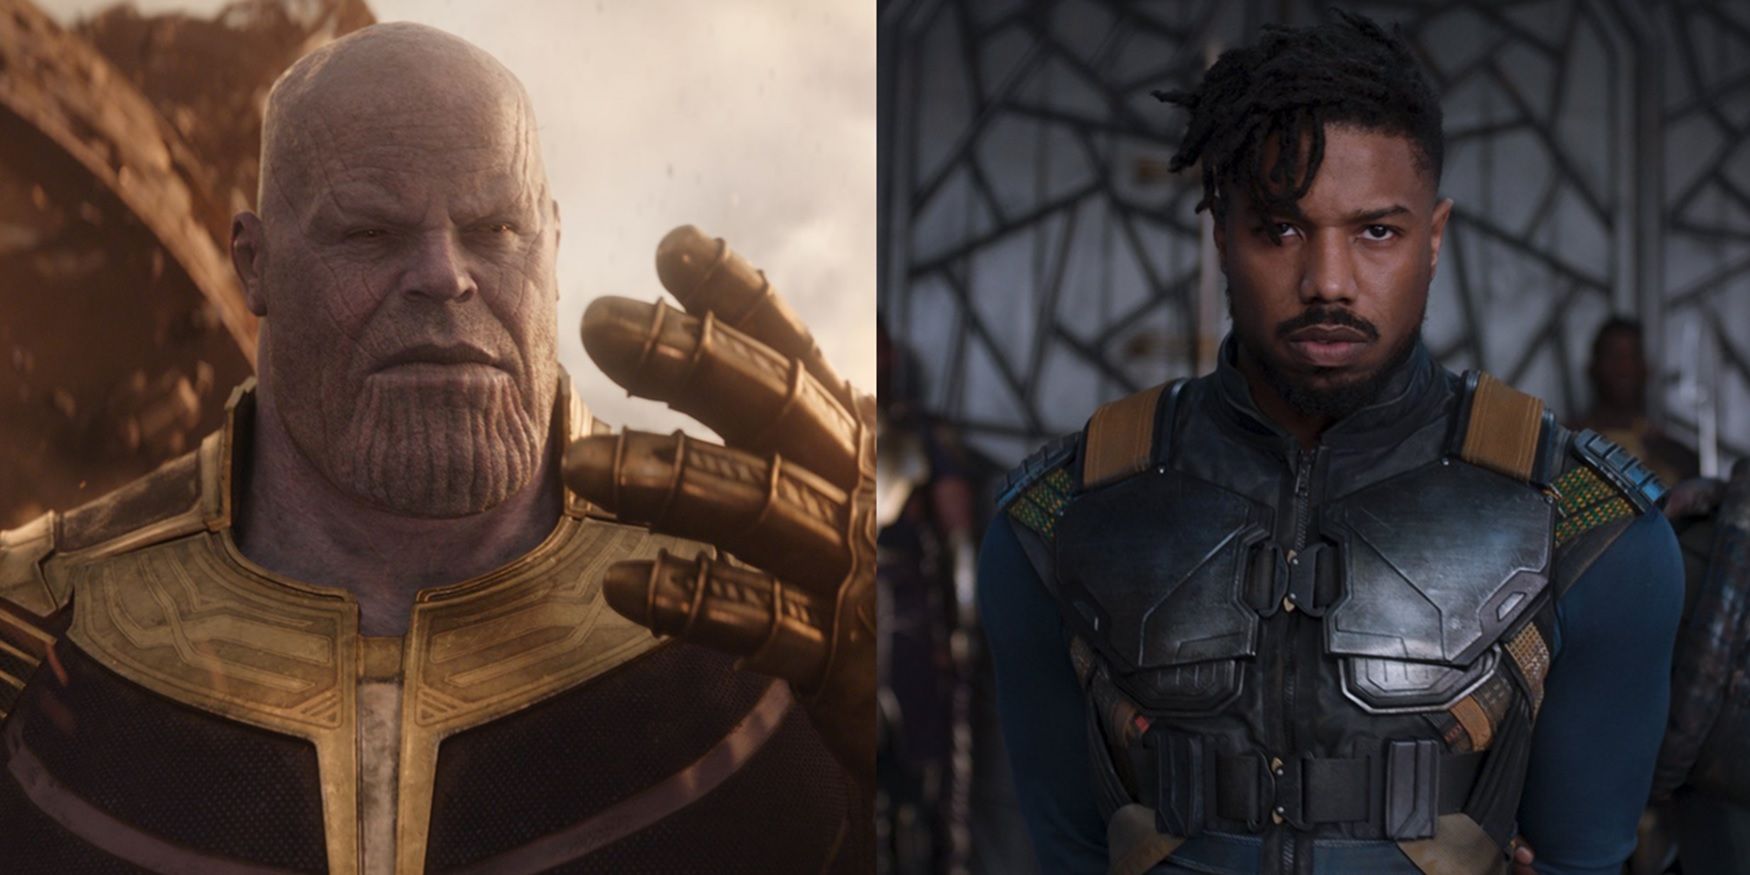 Josh Brolin as Thanos in Avengers Infinity War and Michael B Jordan as Killmonger in Black Panther